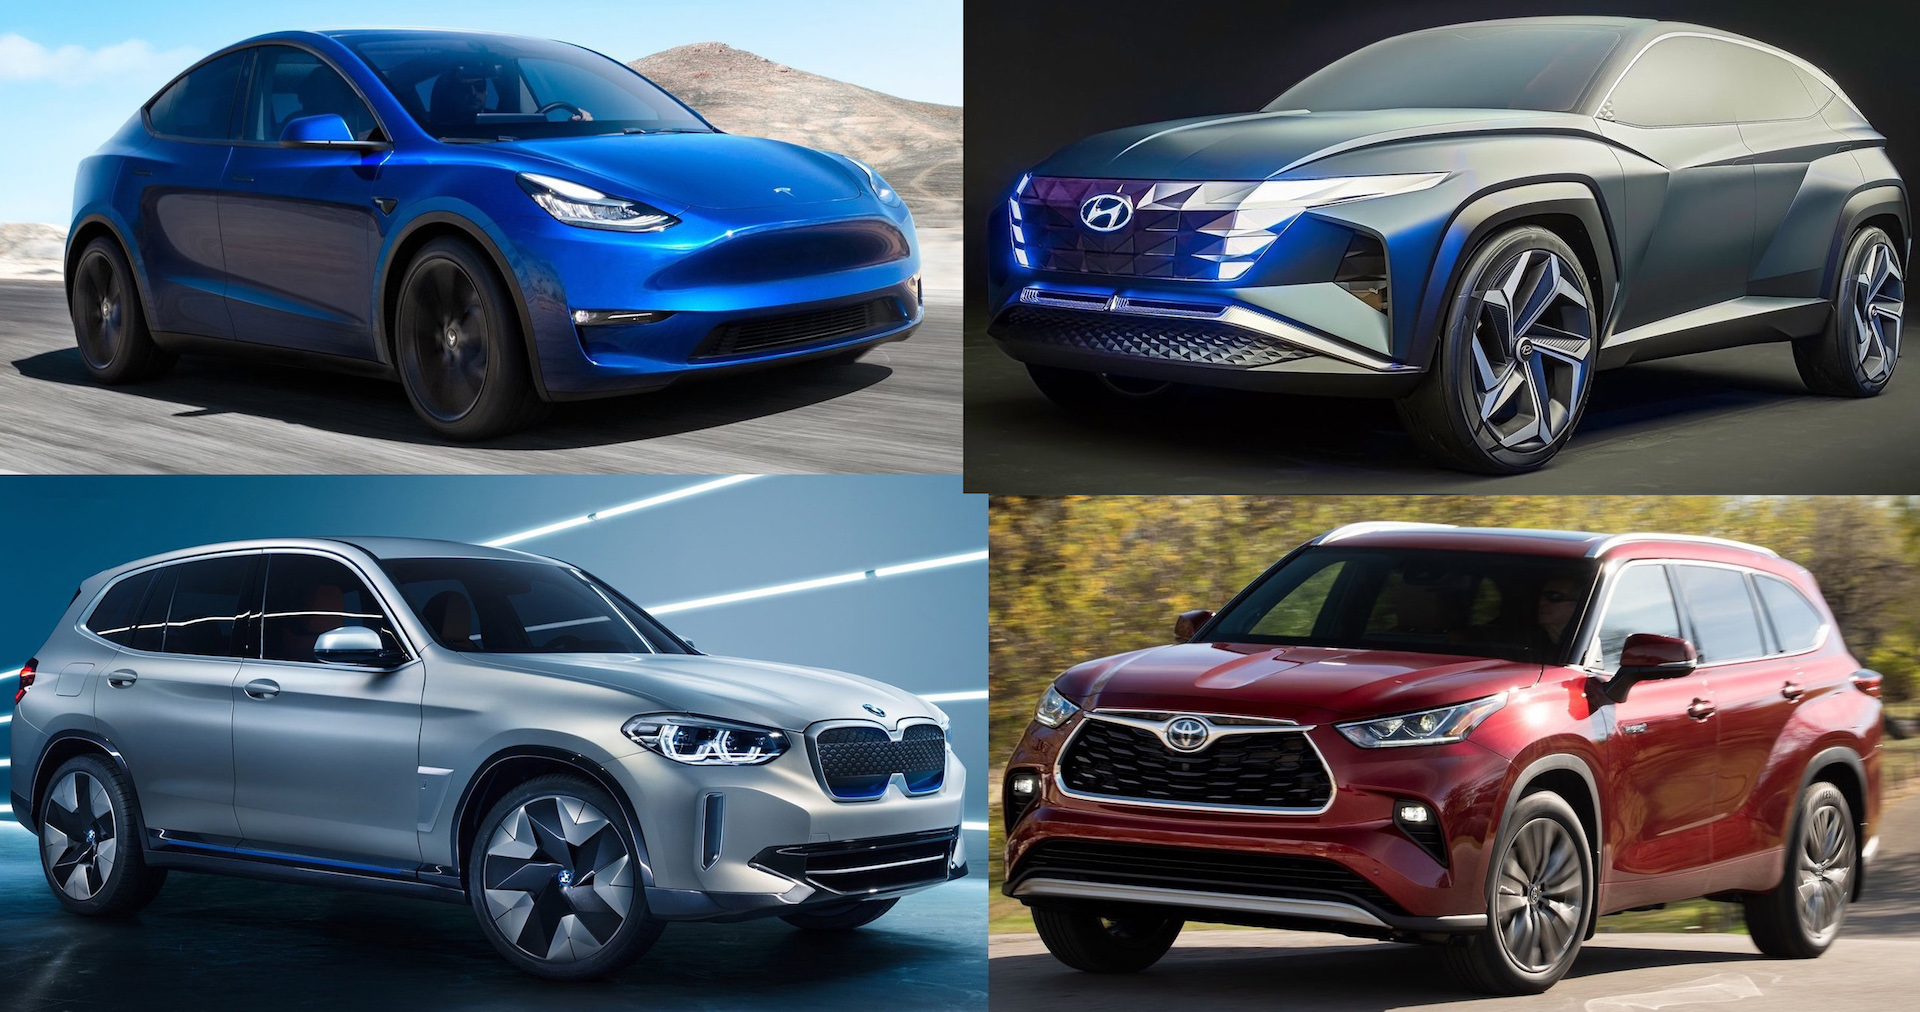 View Top Ten Suv Cars 2021 Pics - Dramatoon